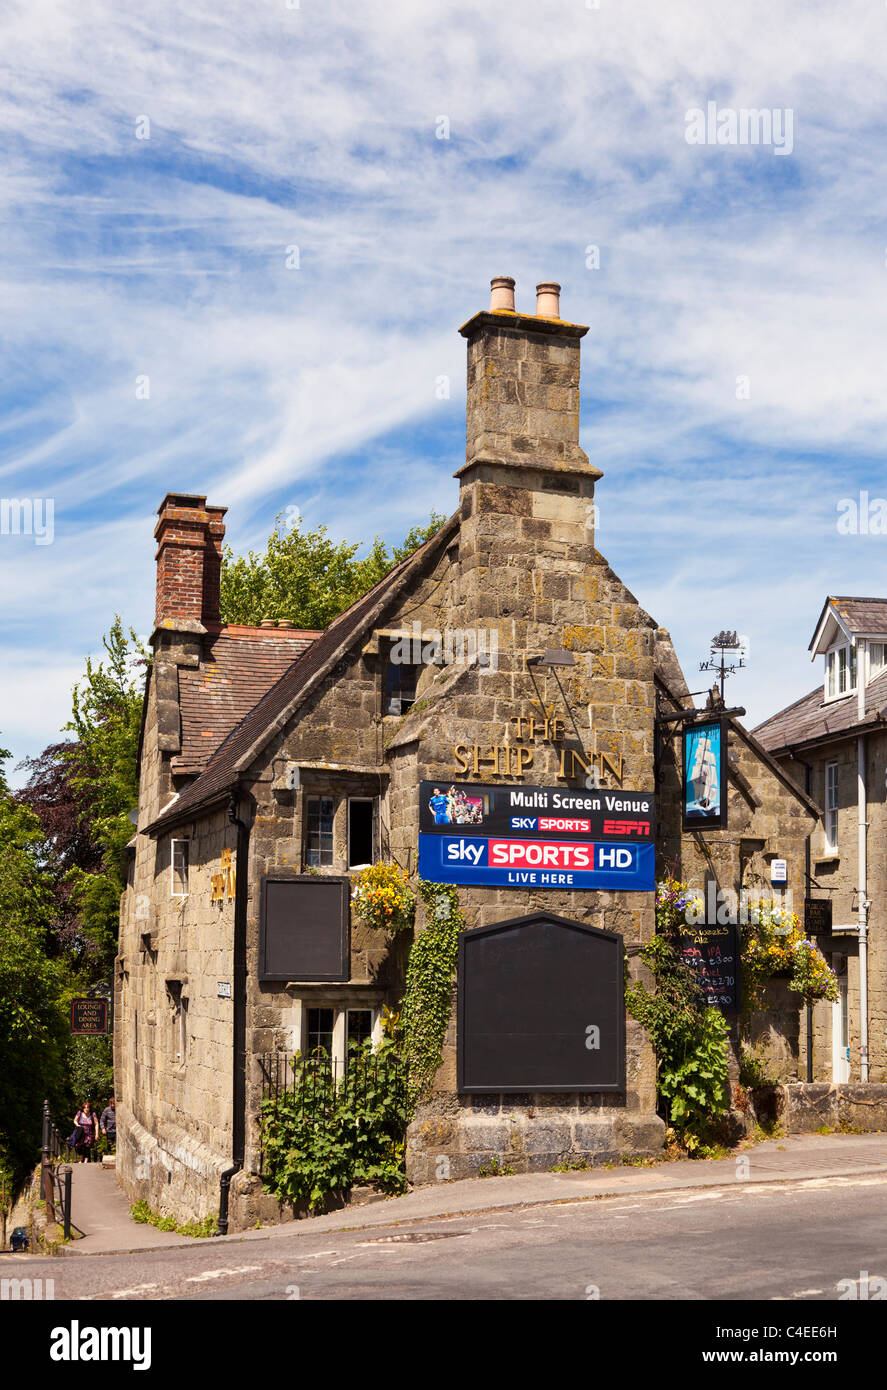 UK pub with Sky Sports promo banner on the side, Dorset, UK Stock Photo